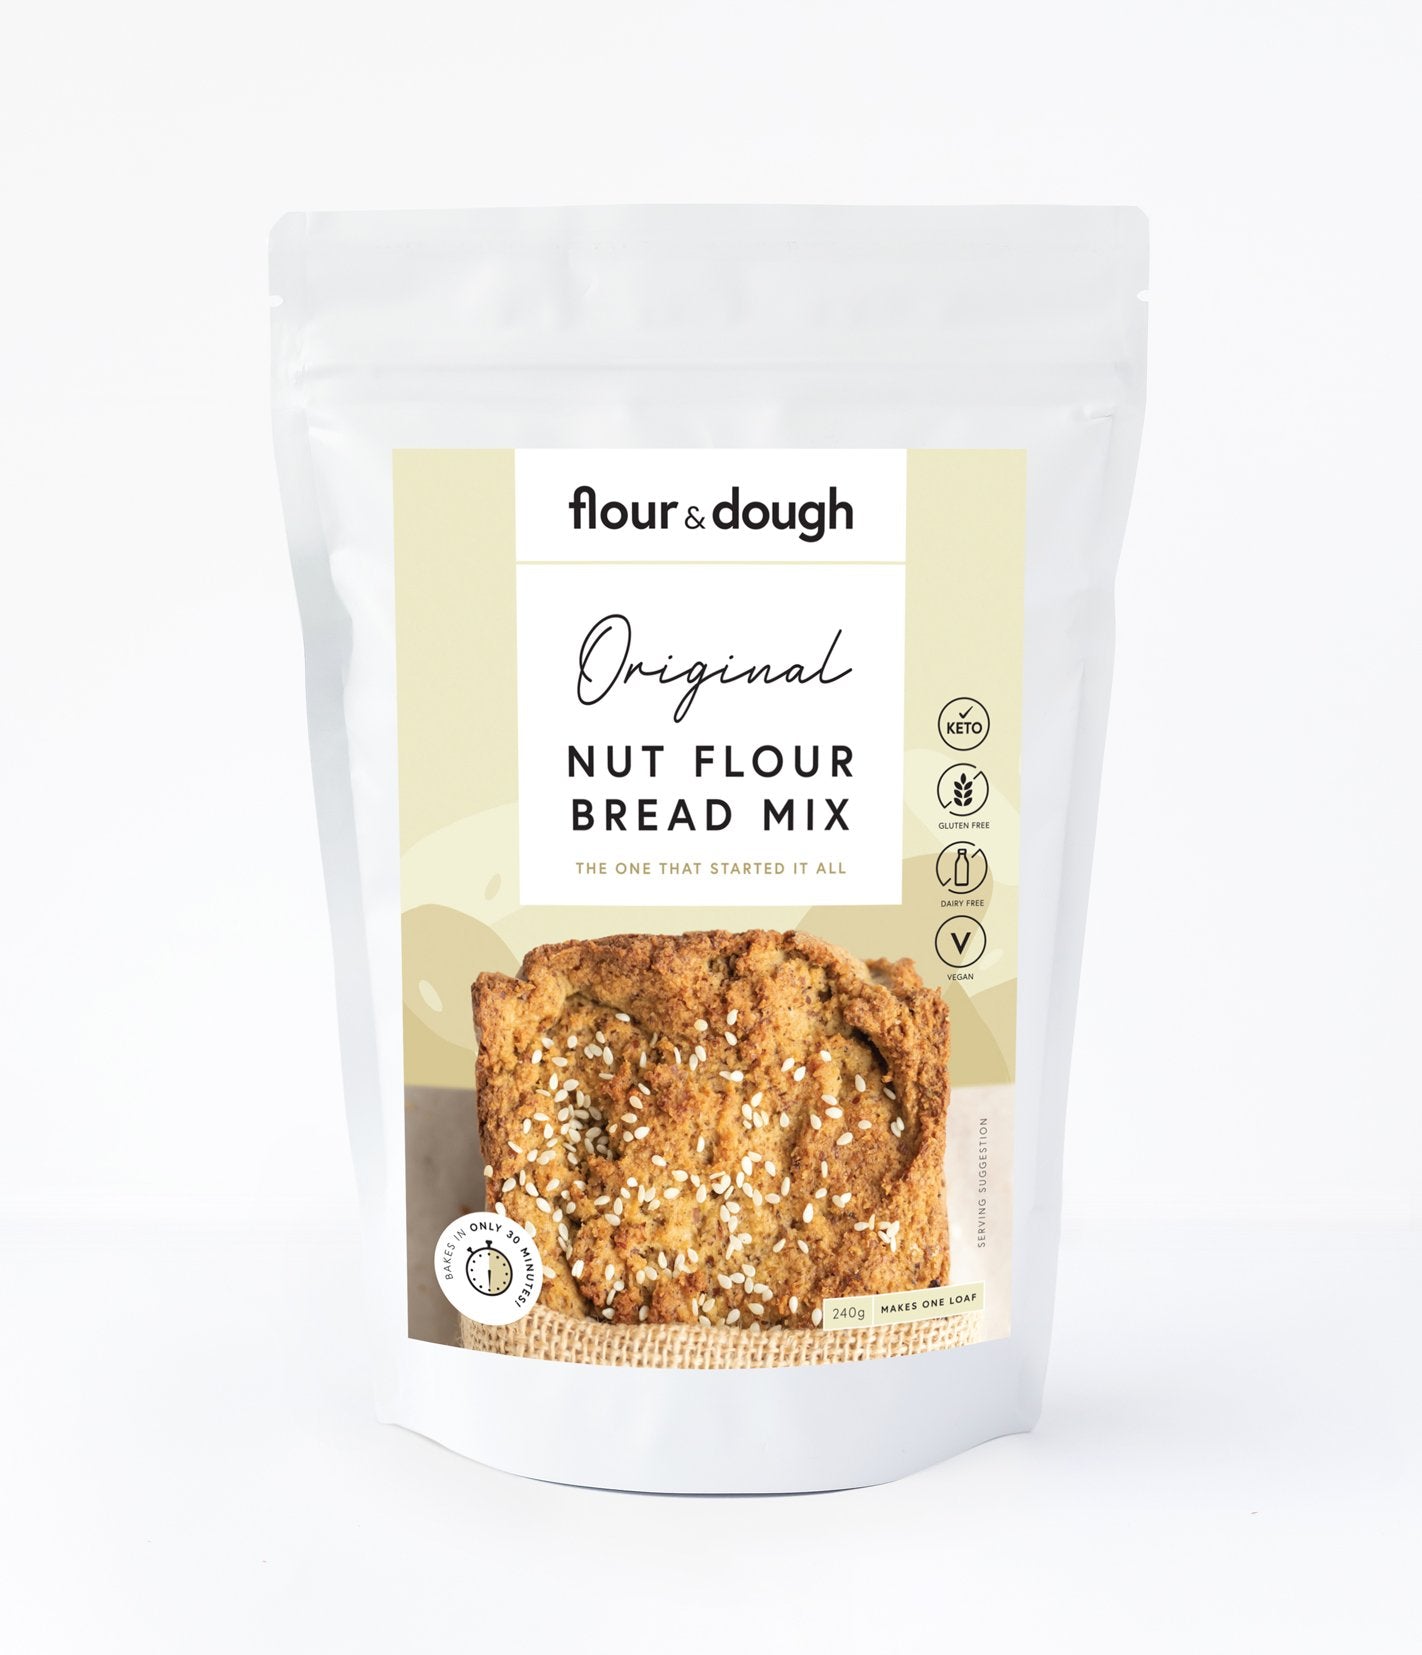 Bread Mix - Original Nut Flour Bread Mix Gluten Free